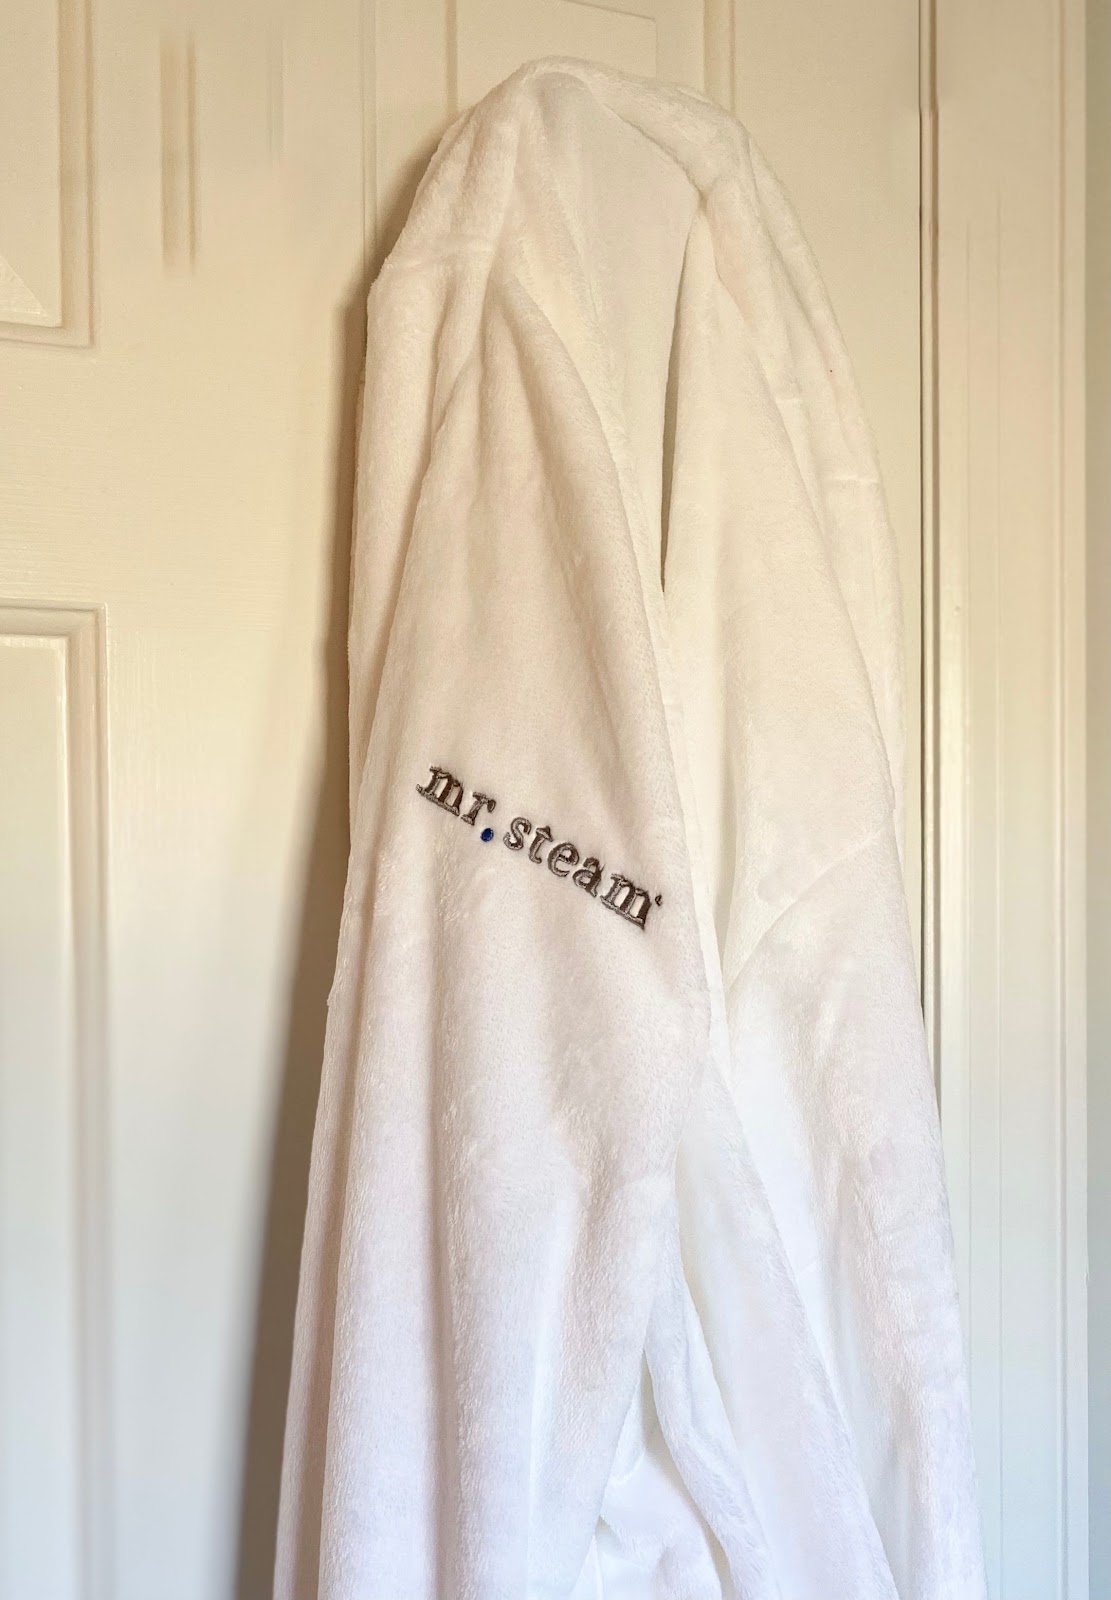 mr steam soft bathroom robe fuzzy textiles for cozy winter feeling